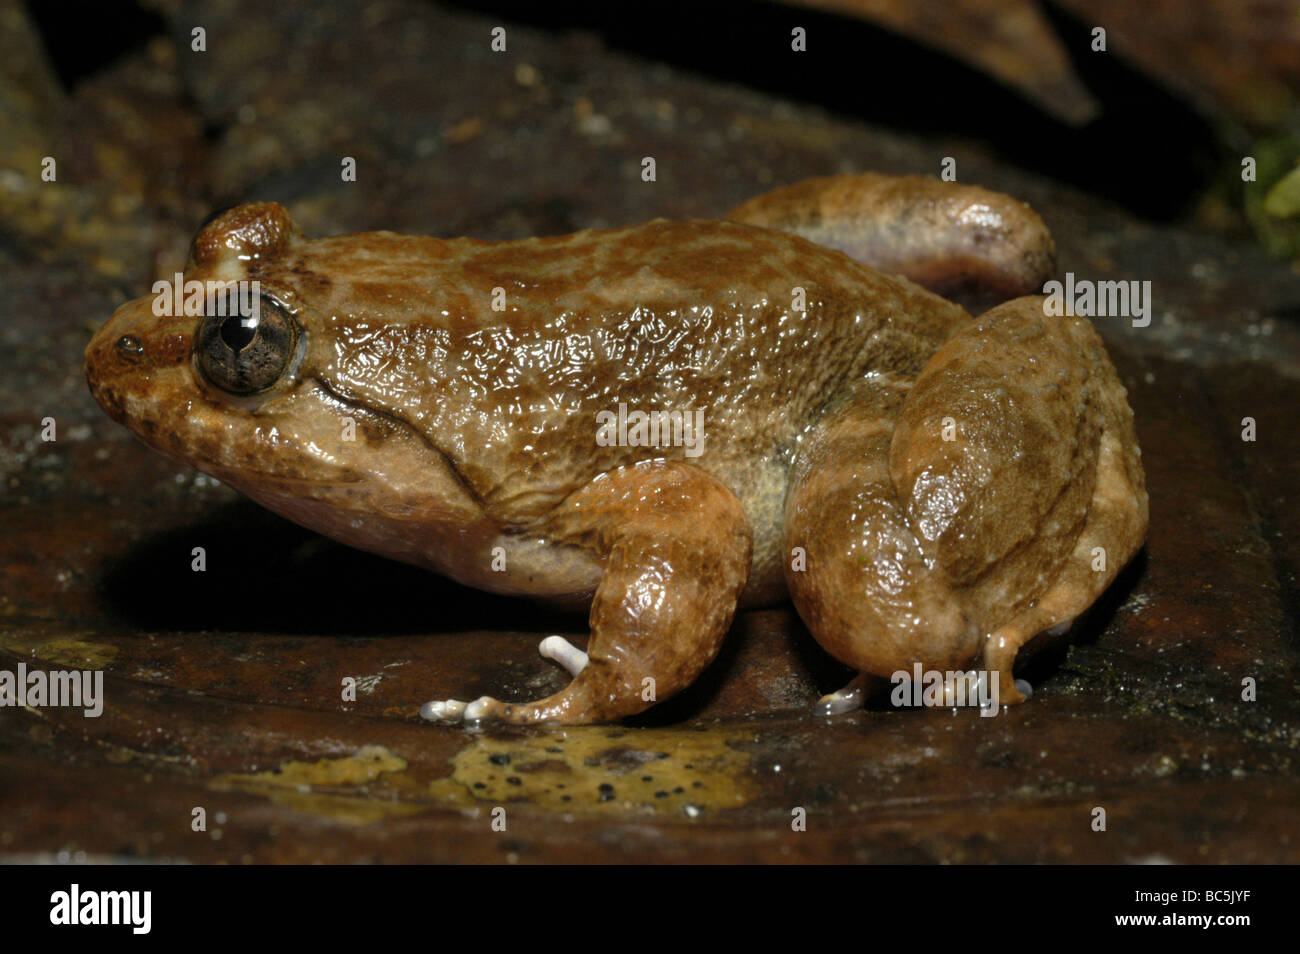 Kuhl's Creek Frog, Limnonectes cf. kuhlii, on the damp forest floor Stock Photo